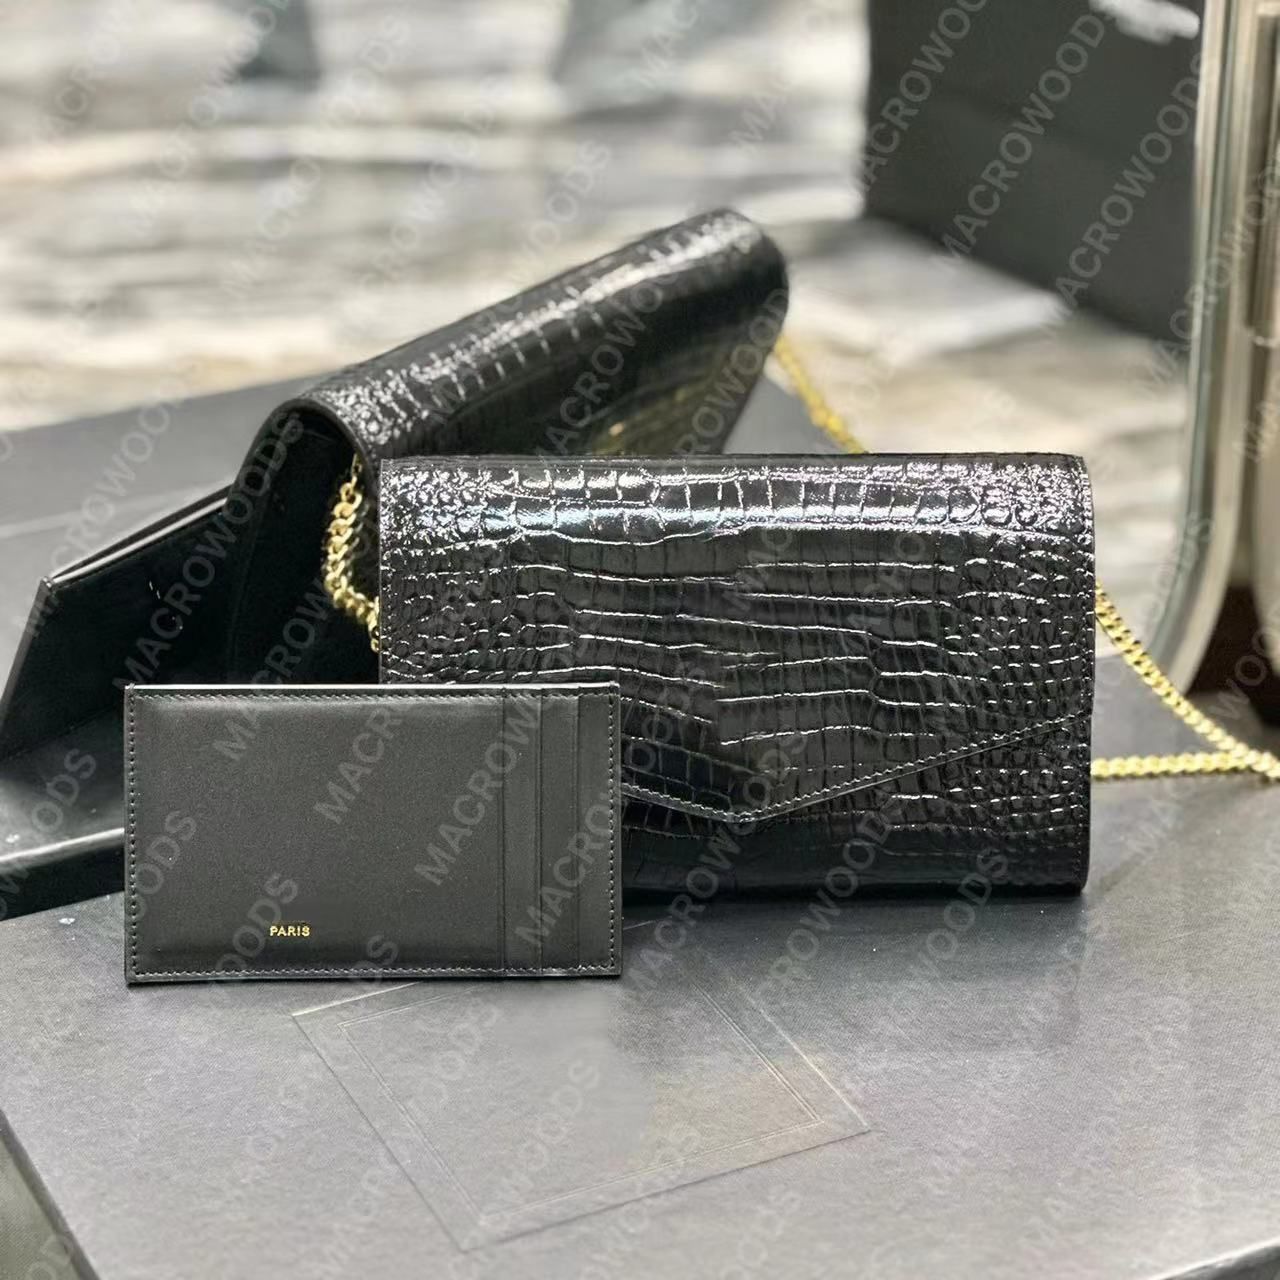 Replica Louis Vuitton Capucines MM Bag In Embossed Crocodile